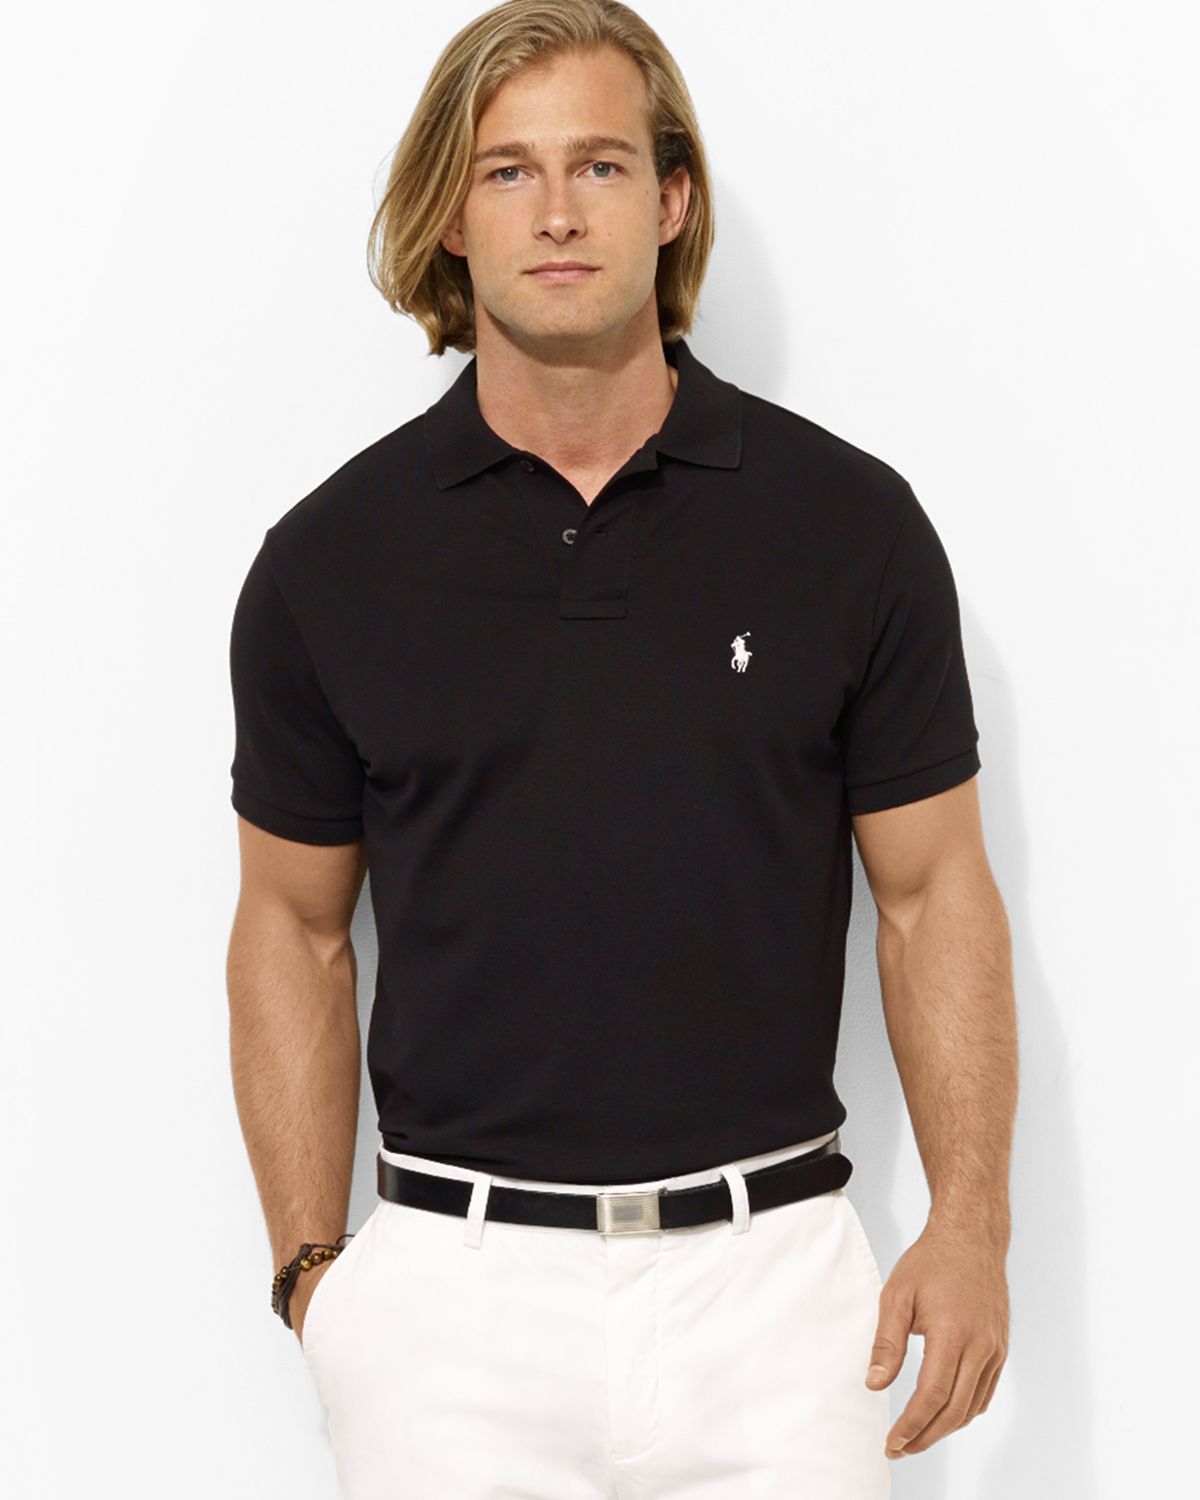 Lyst - Ralph Lauren Polo Customfit Stretchmesh Polo Shirt in Black for Men